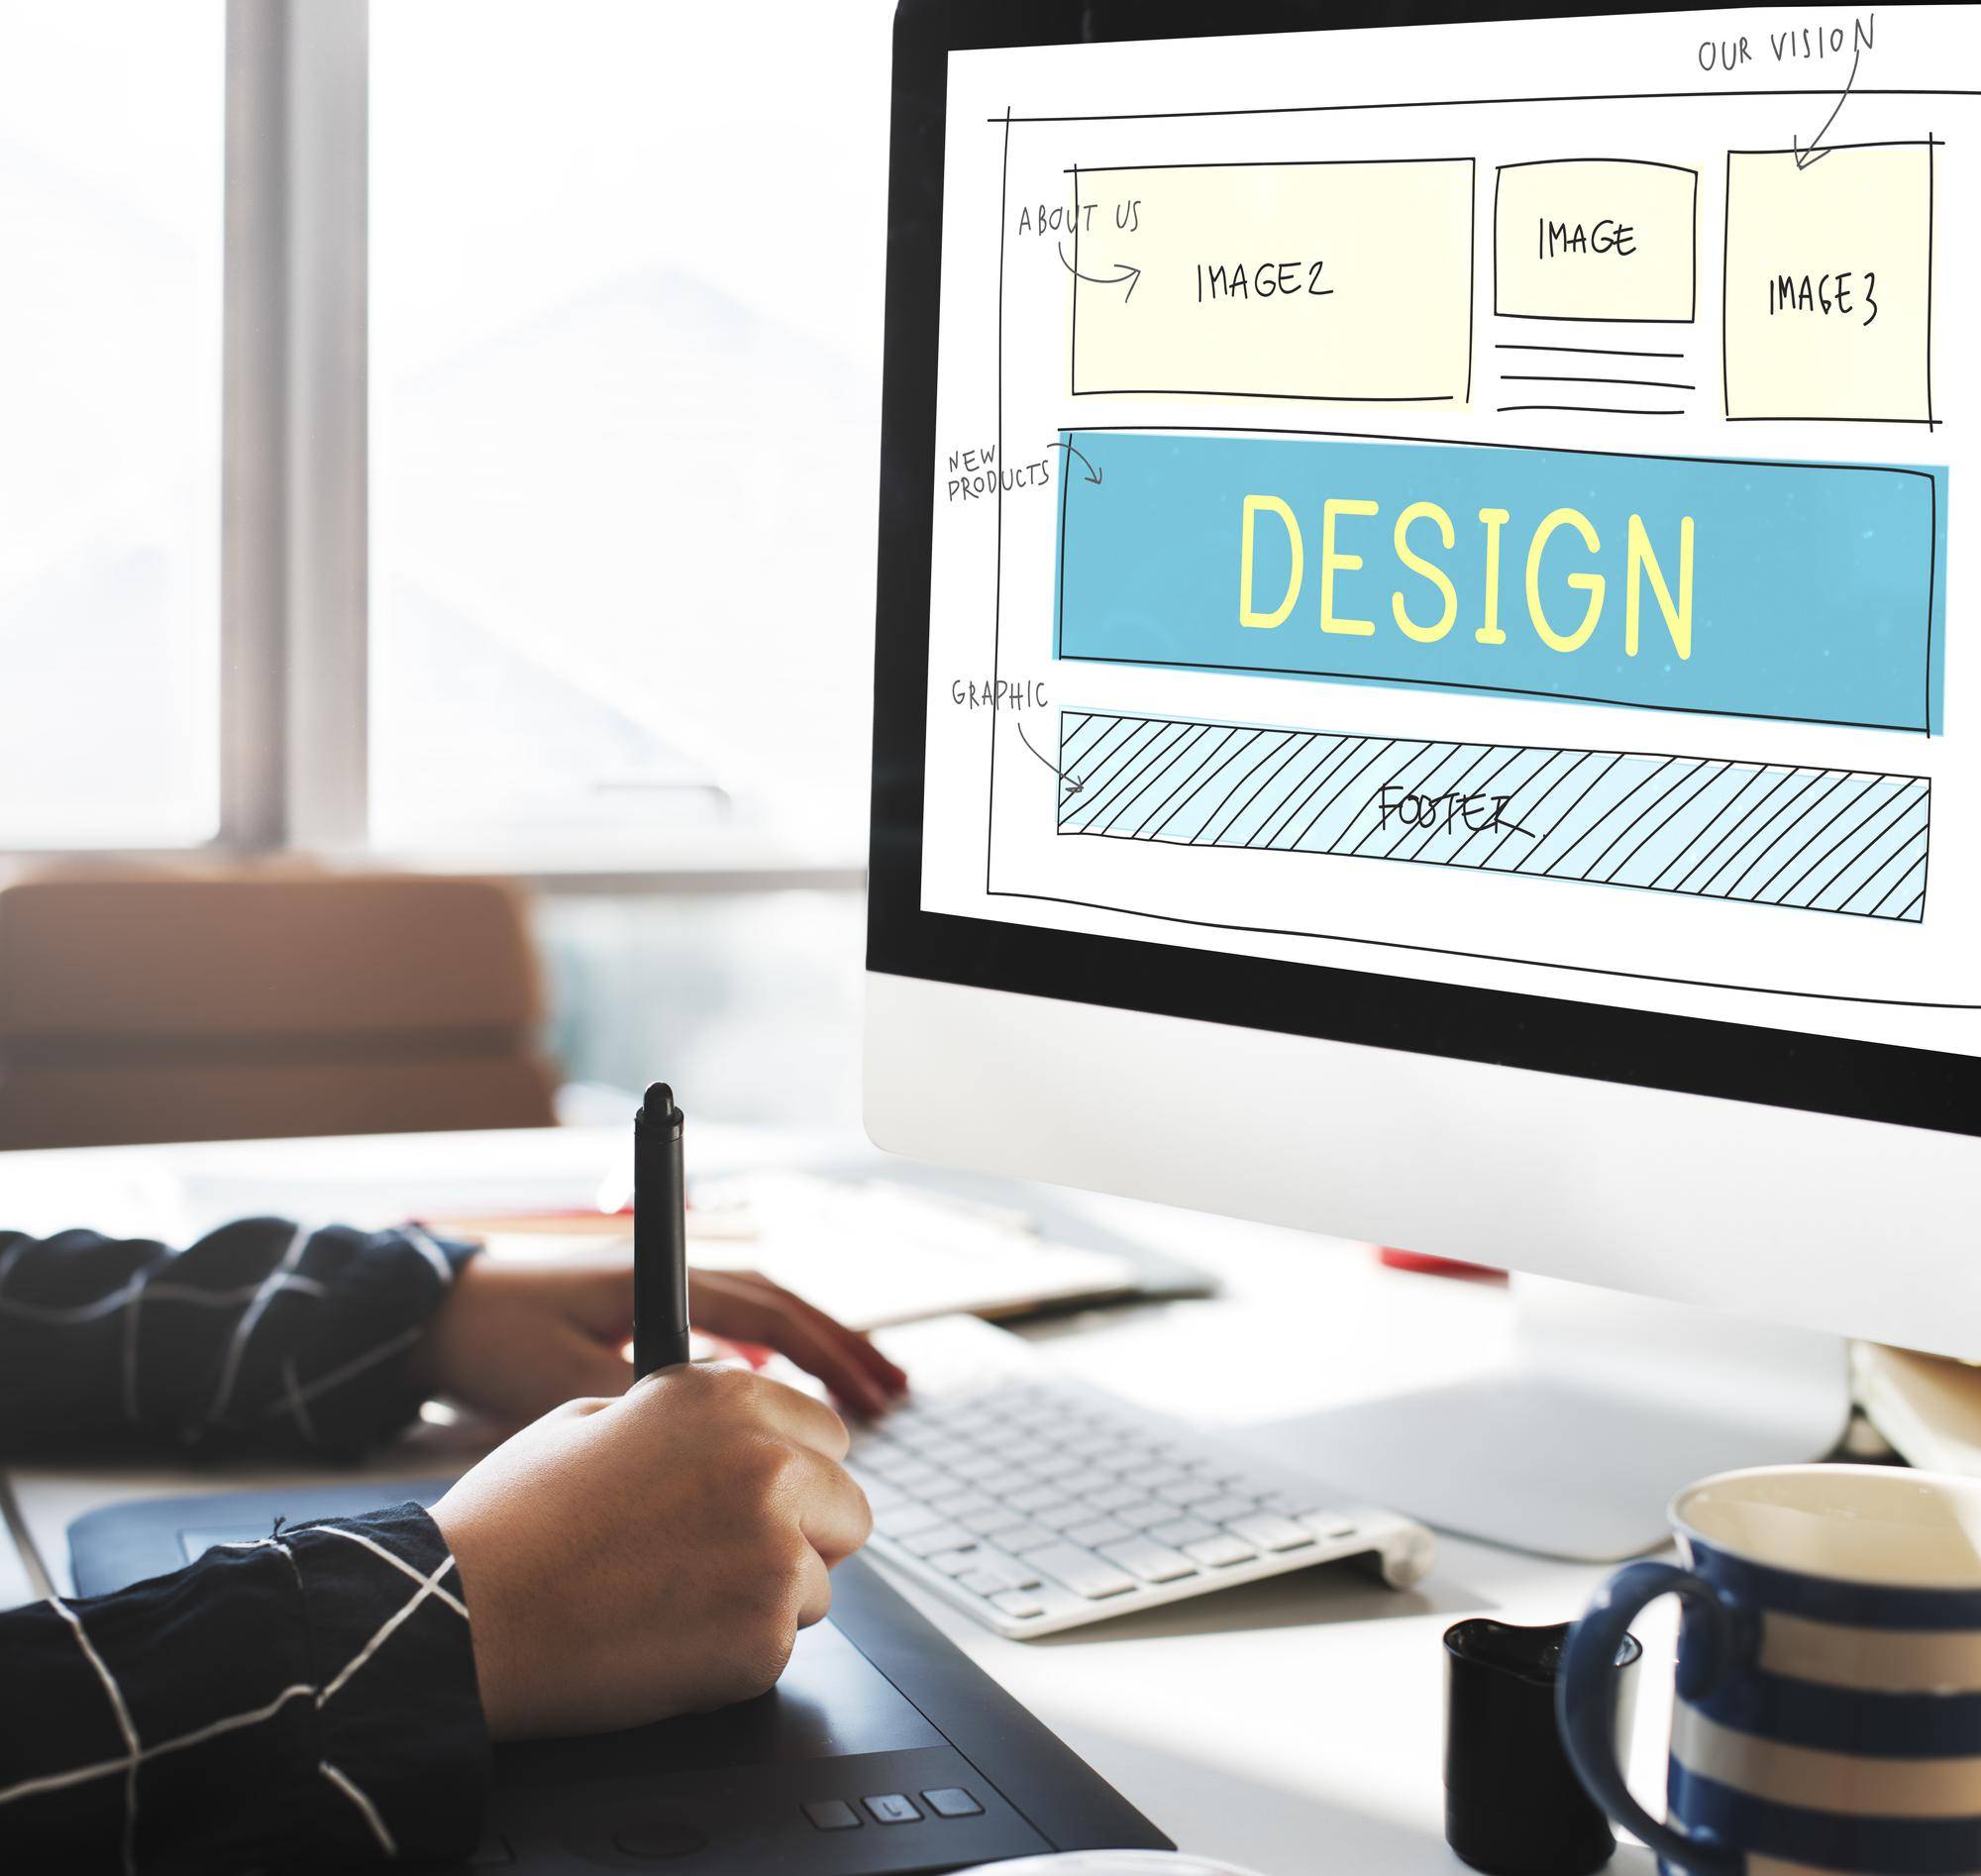 design html web design template concept 53876 133658 - فروش محصولات با طراحی سایت چگونه است؟